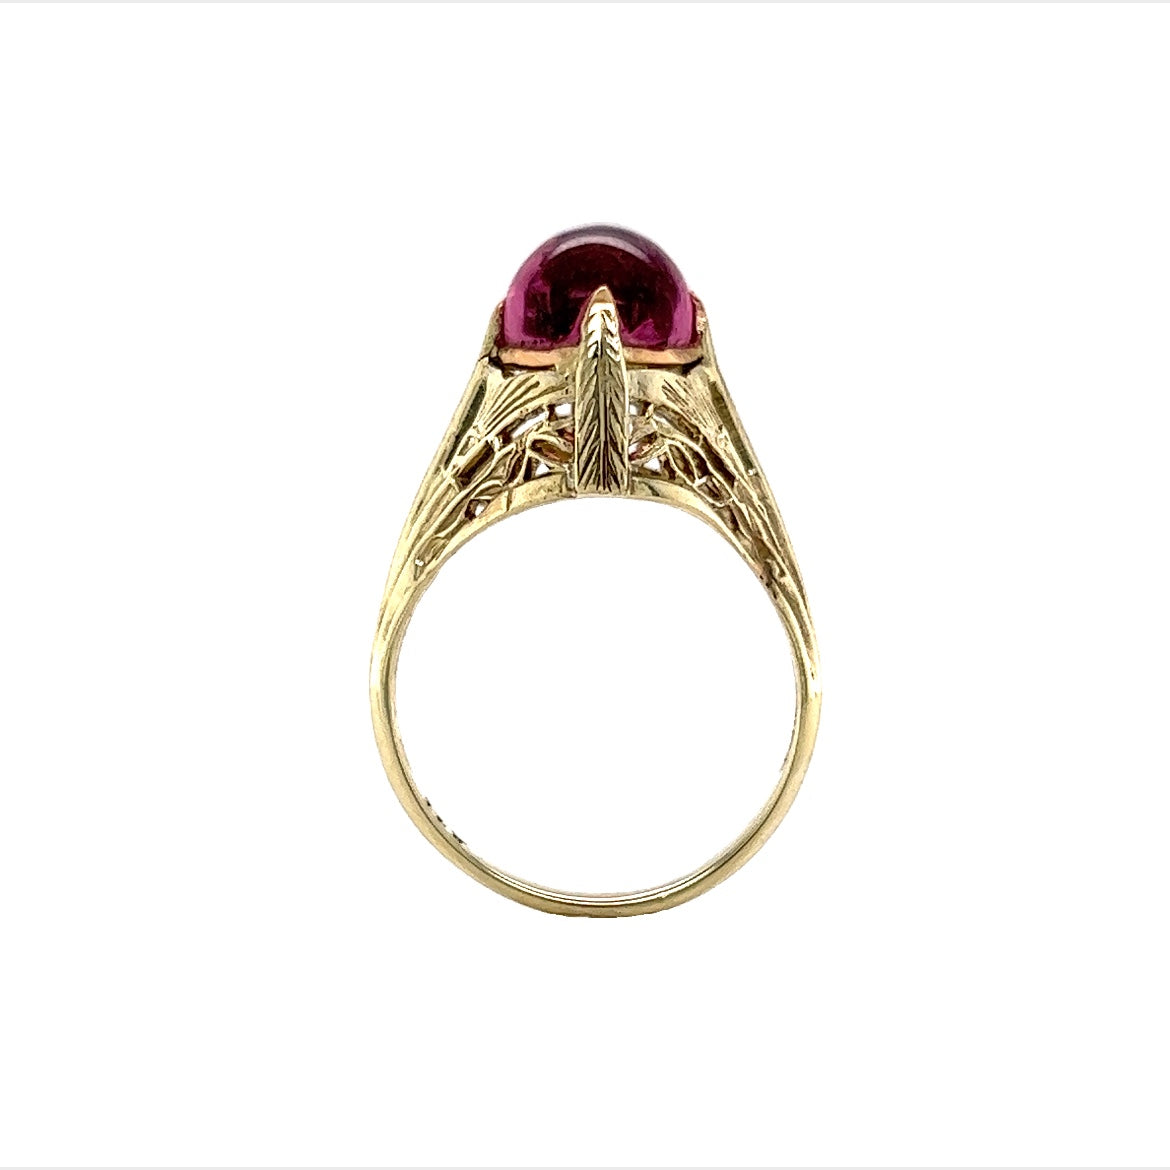 Art Deco Cabochon Cut Pink Tourmaline Ring in 14k Yellow Gold